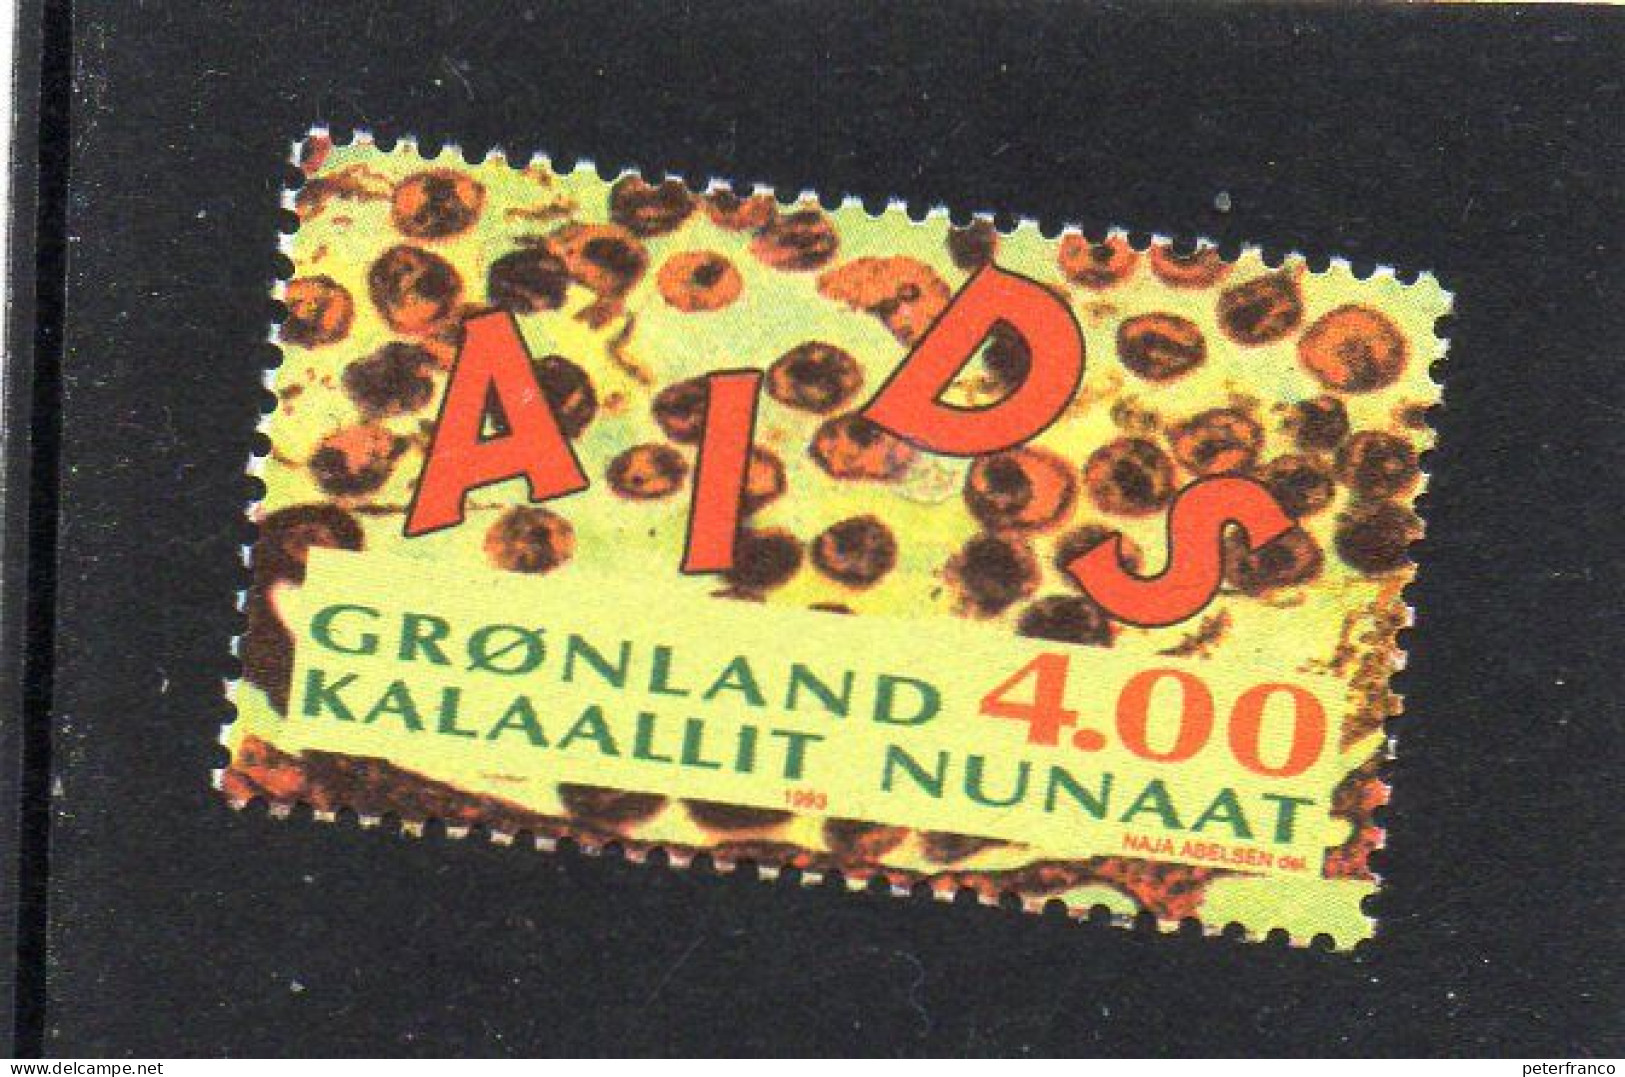 1993 Groenlandia - Lotta Contro L'AIDS - Neufs